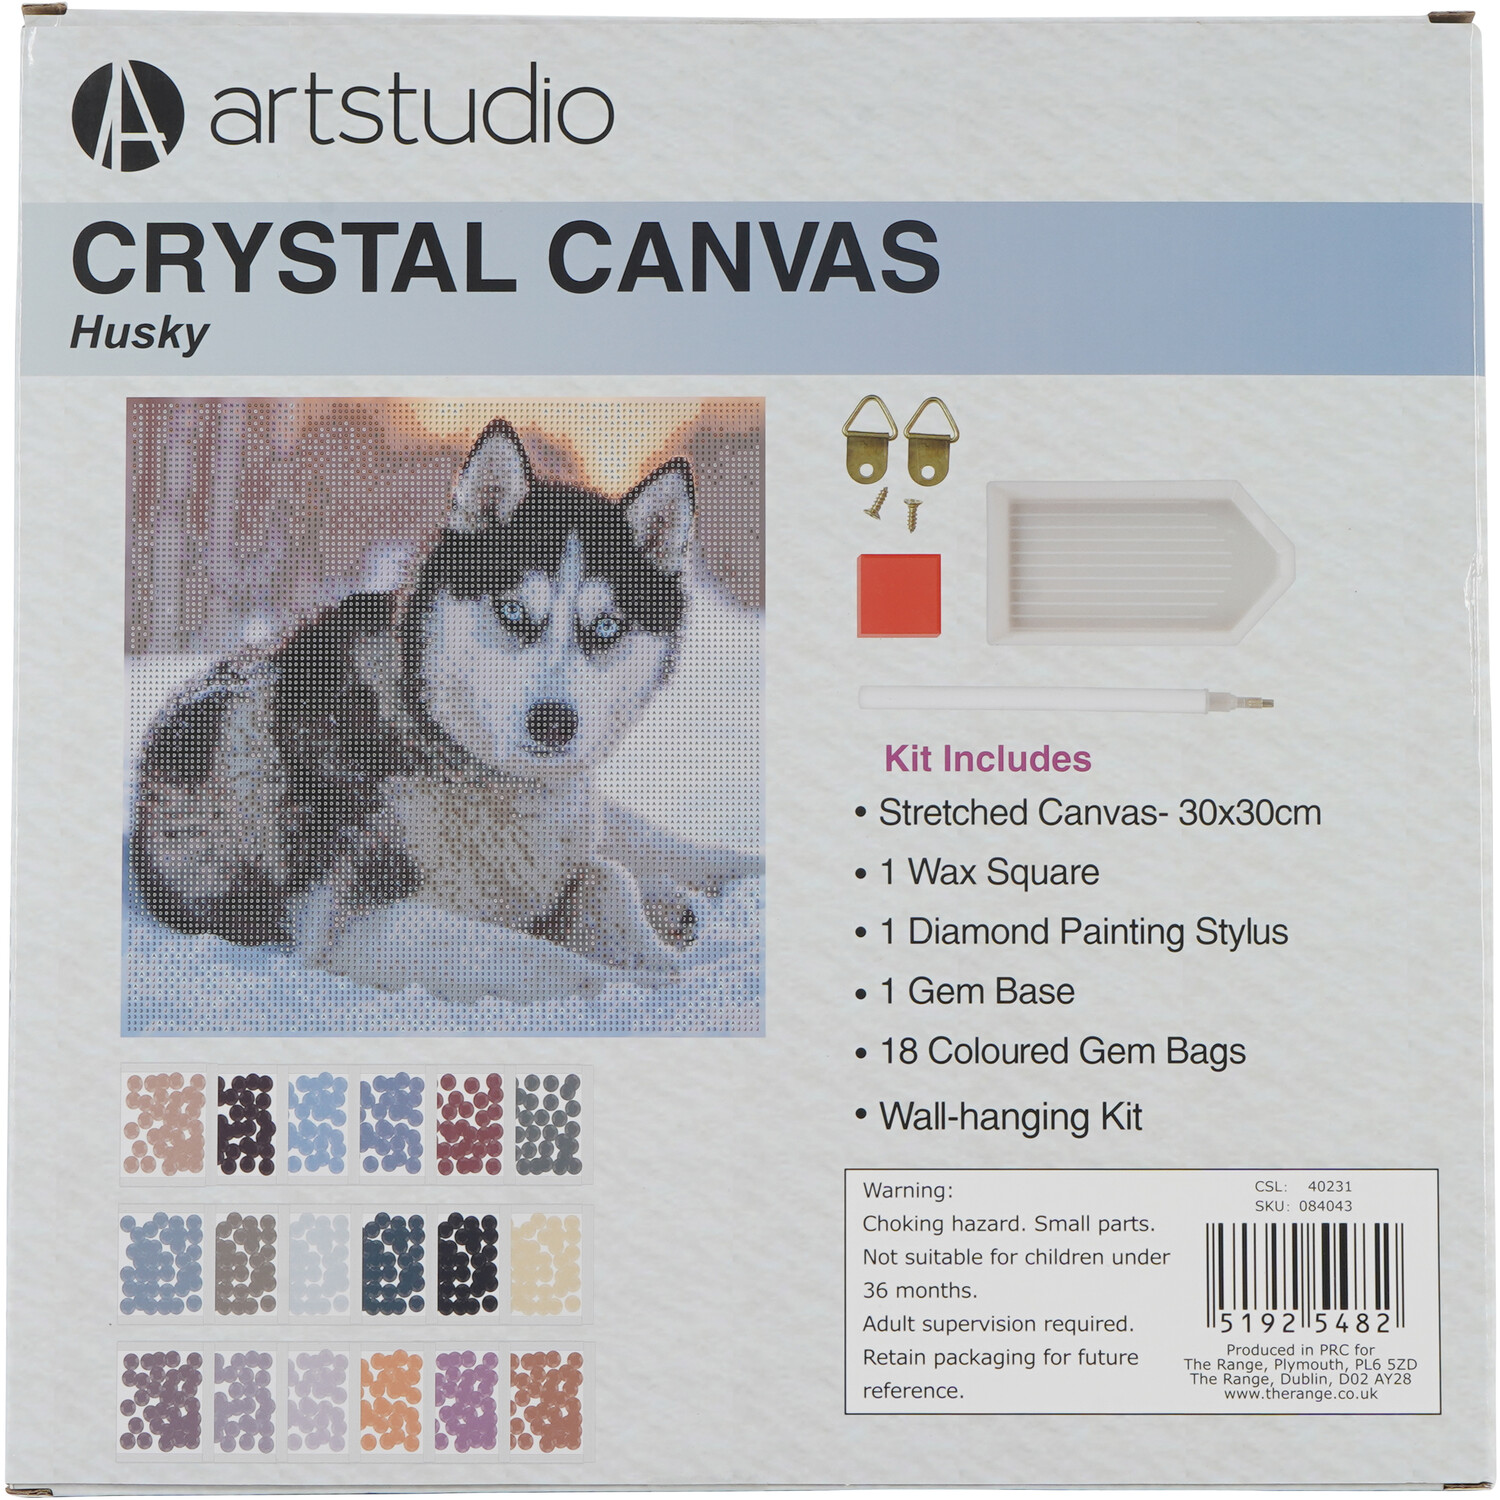 Crystal Canvas Tiger or Husky Image 6